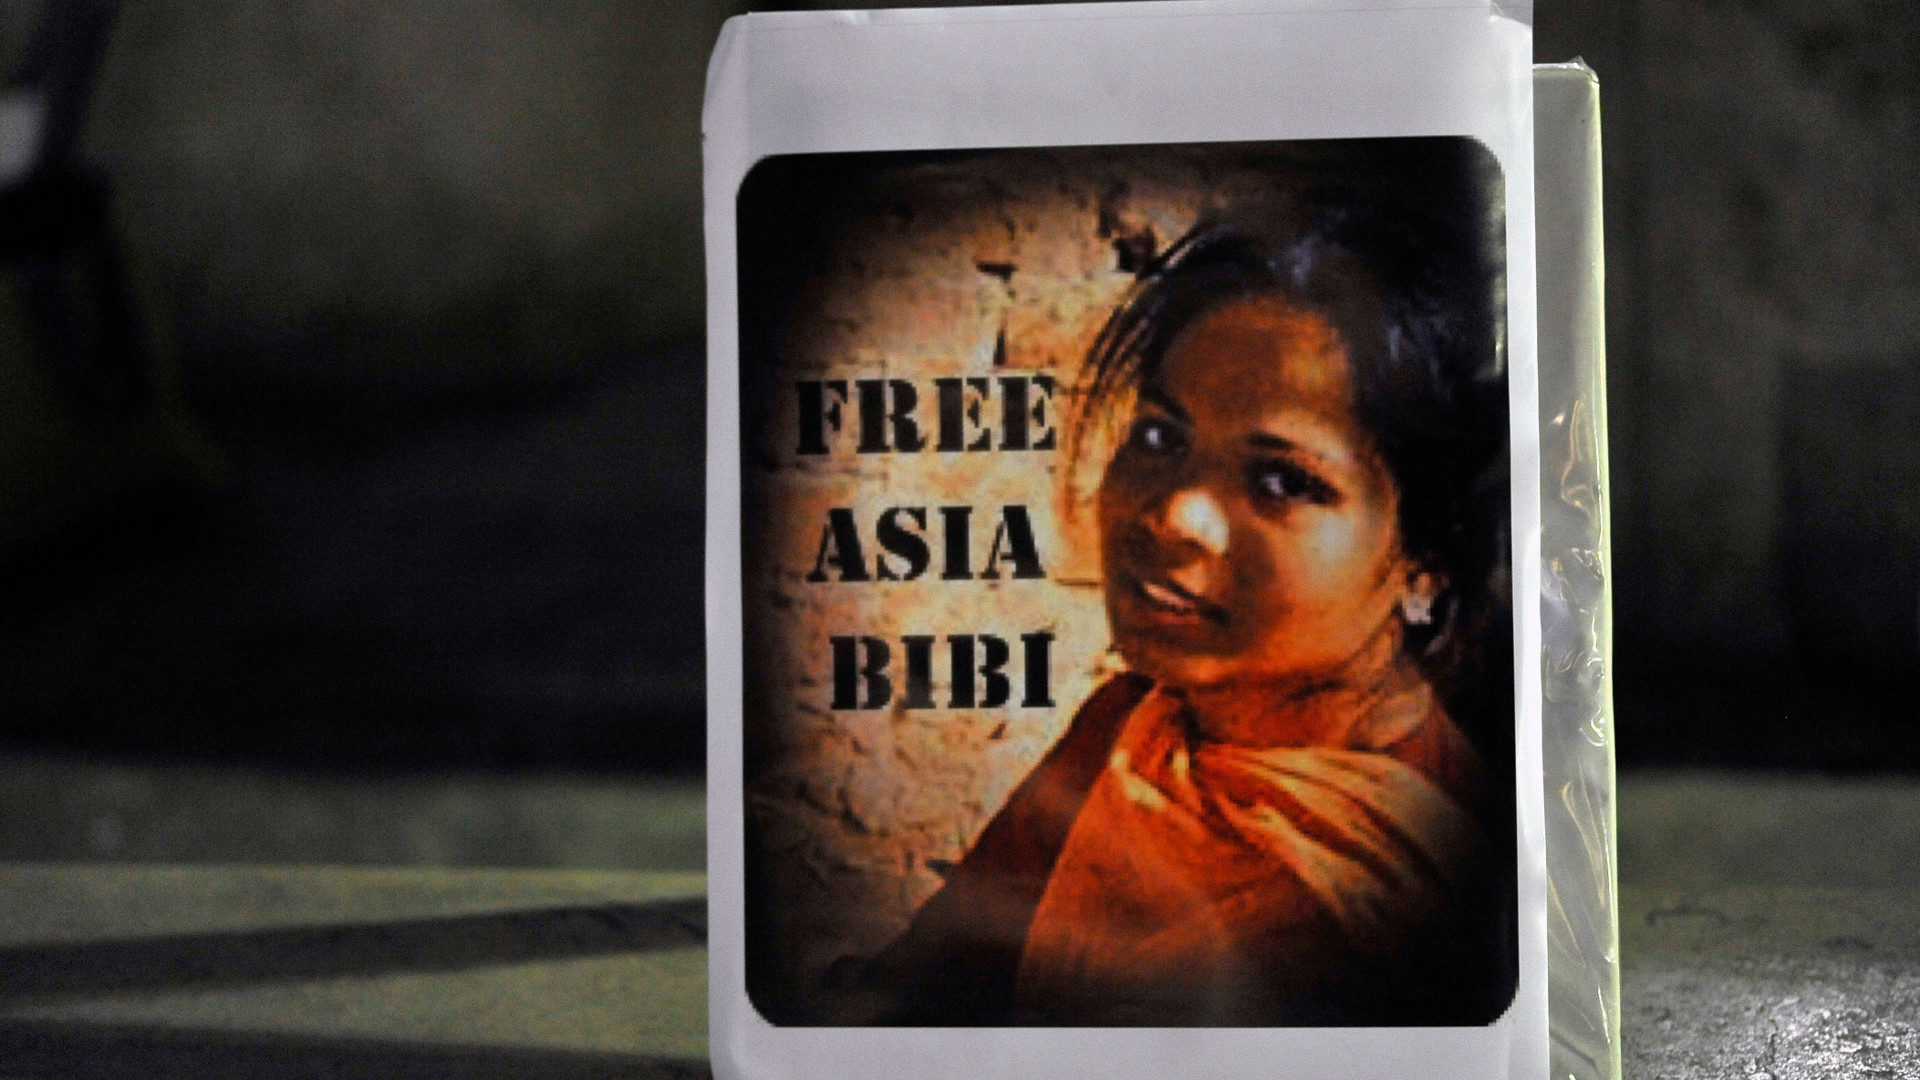 Plakat "Free Asia Bibi", einer in Pakistan verfolgten Christin